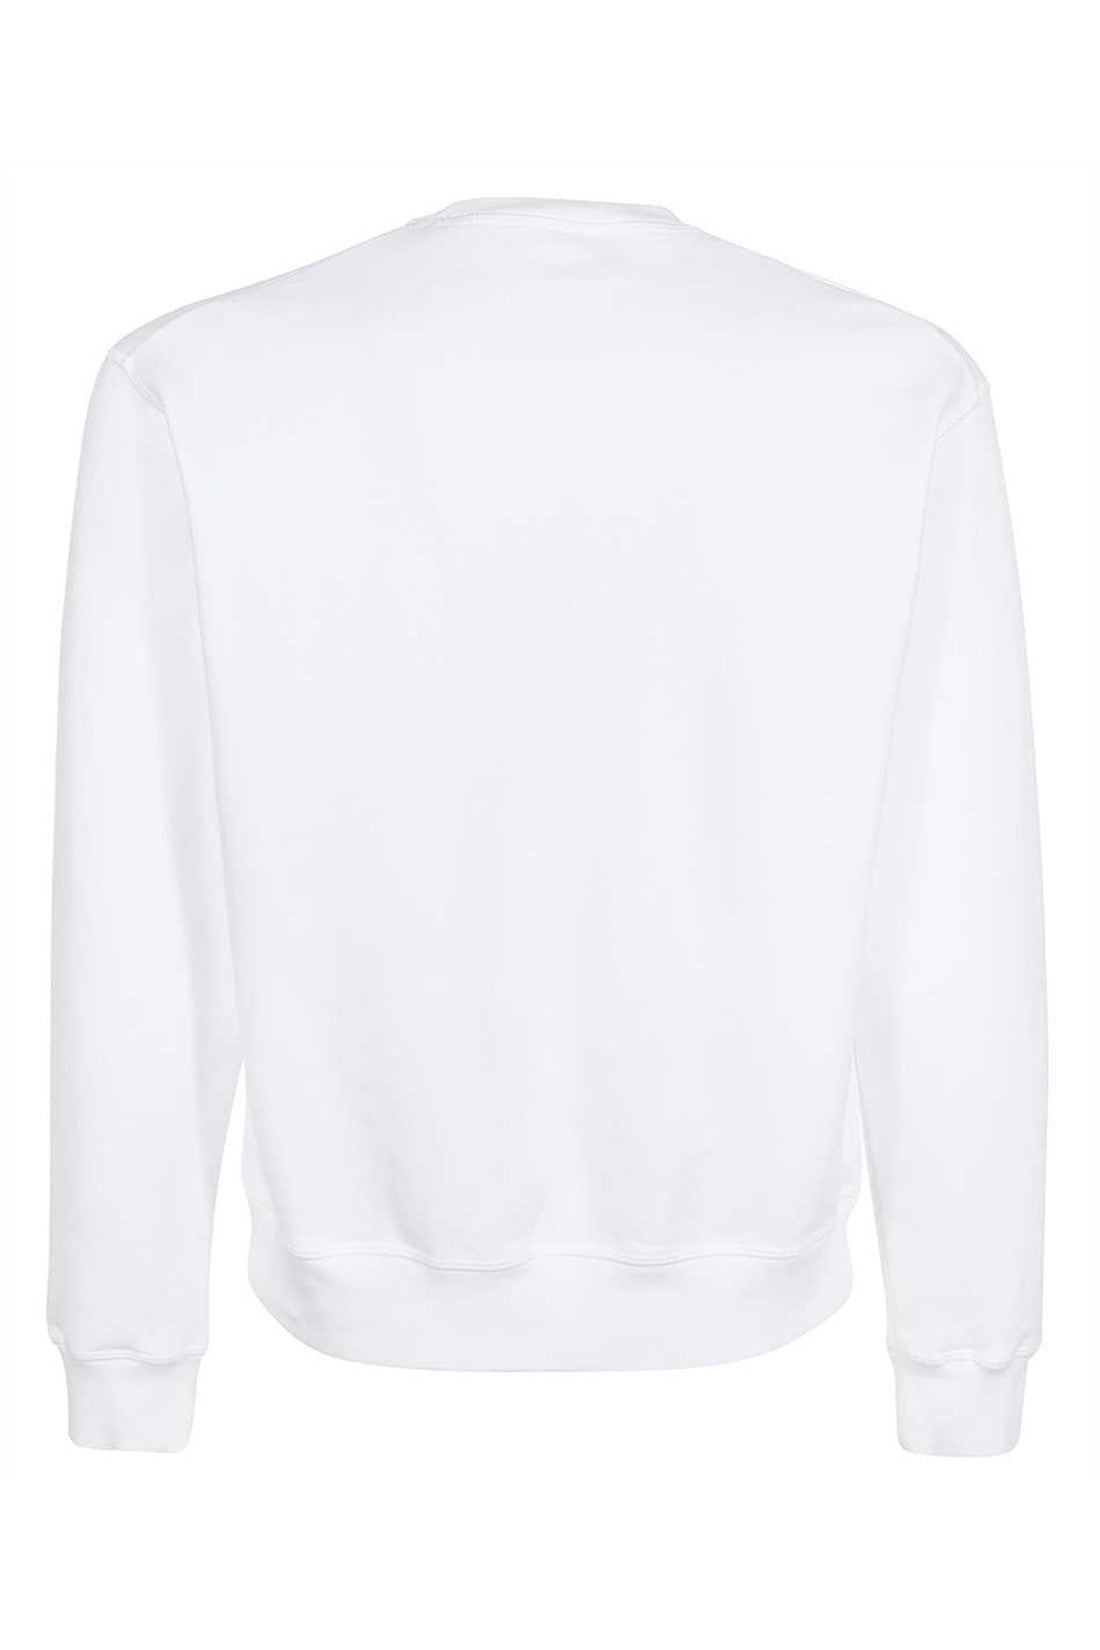 Printed cotton sweatshirt